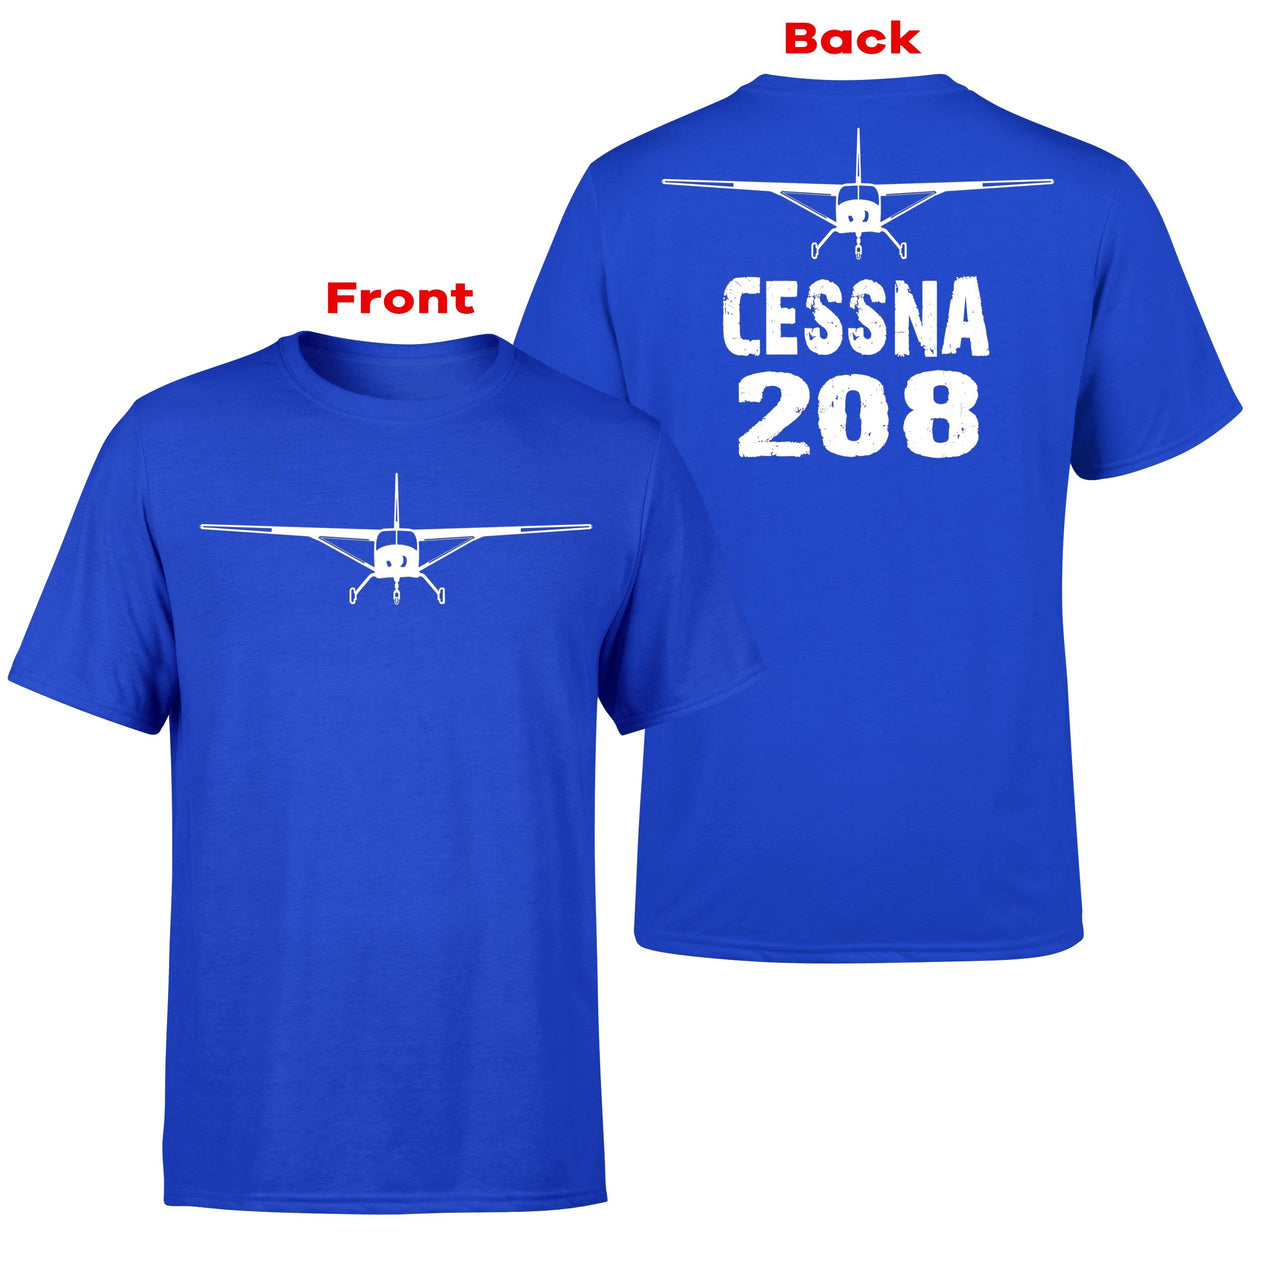 Cessna 208 & Plane Designed Double-Side T-Shirts